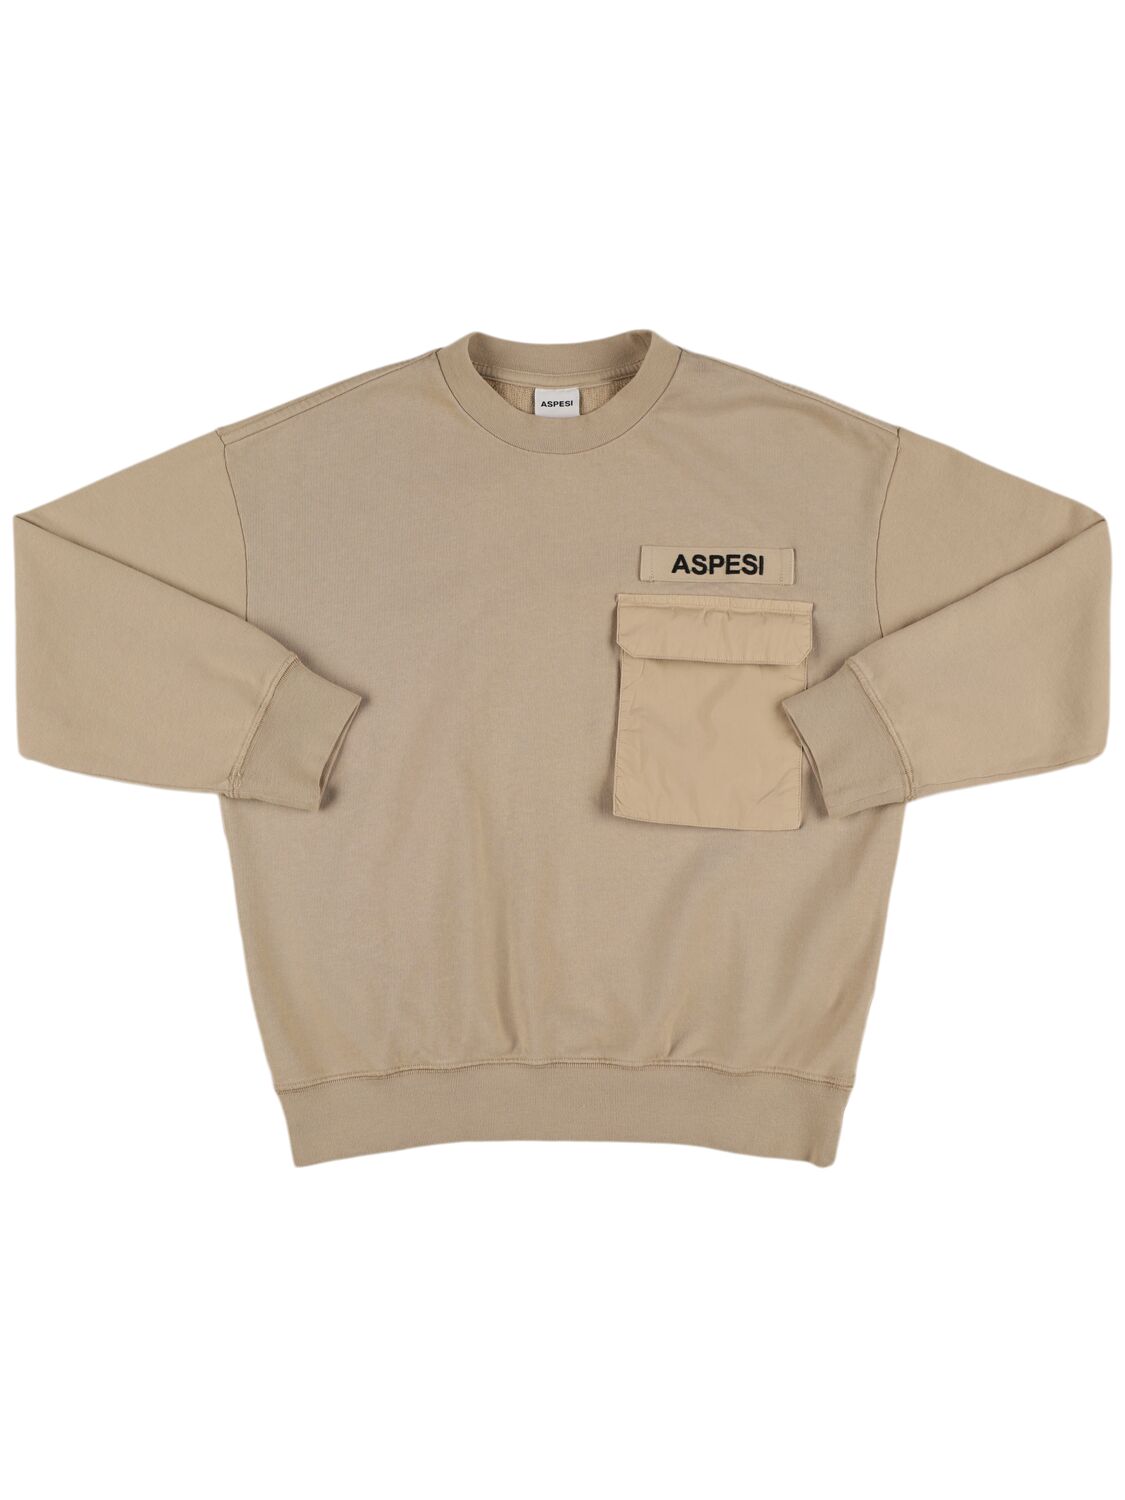 Aspesi Kids' Cotton Sweatshirt W/ Pocket In Light Brown